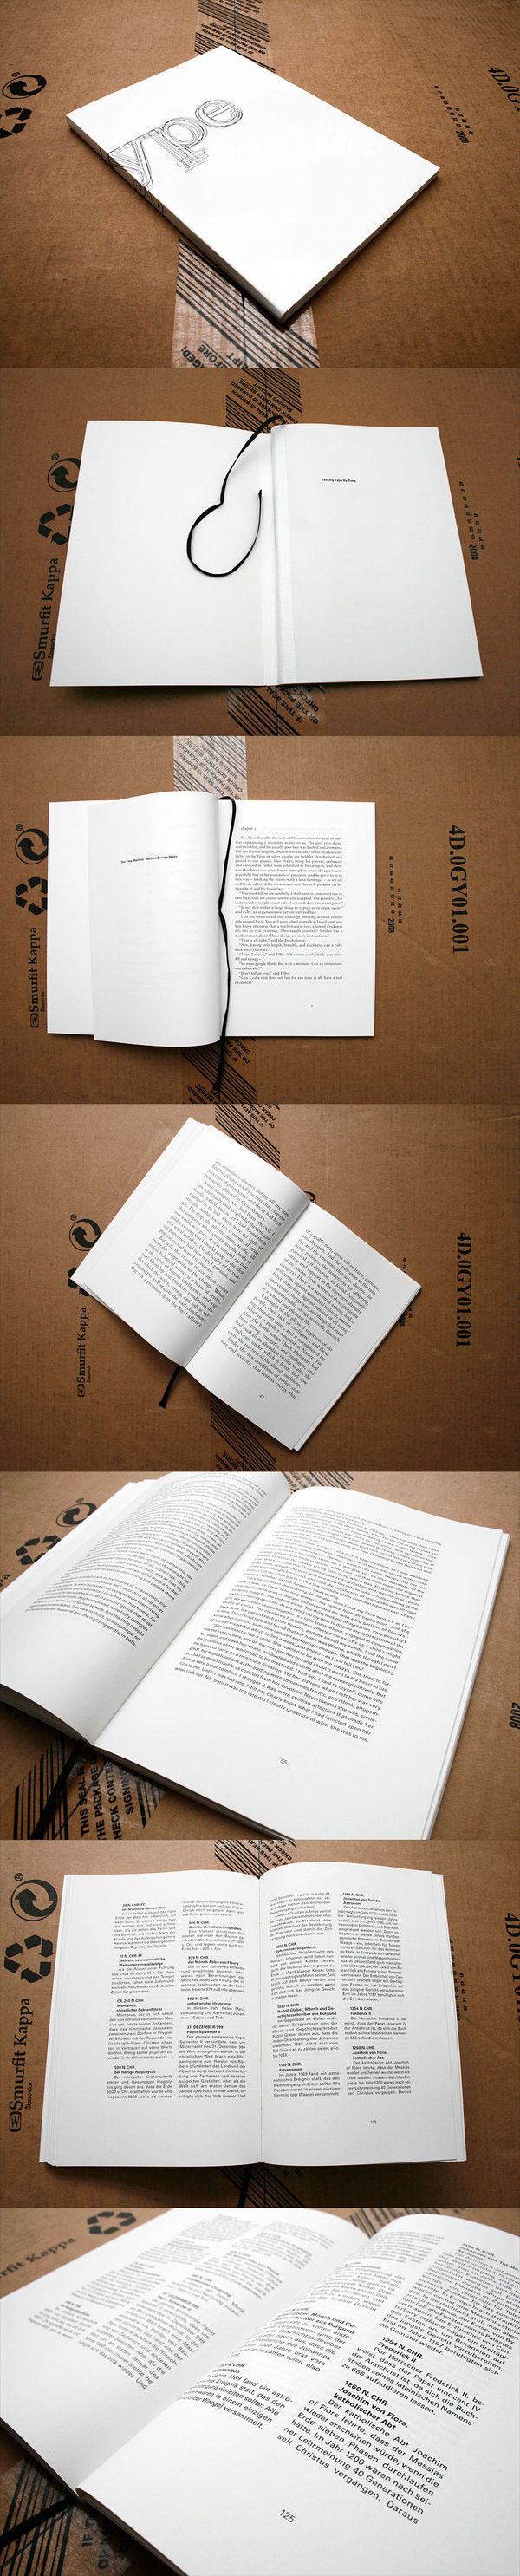 book type typesetting printed manual